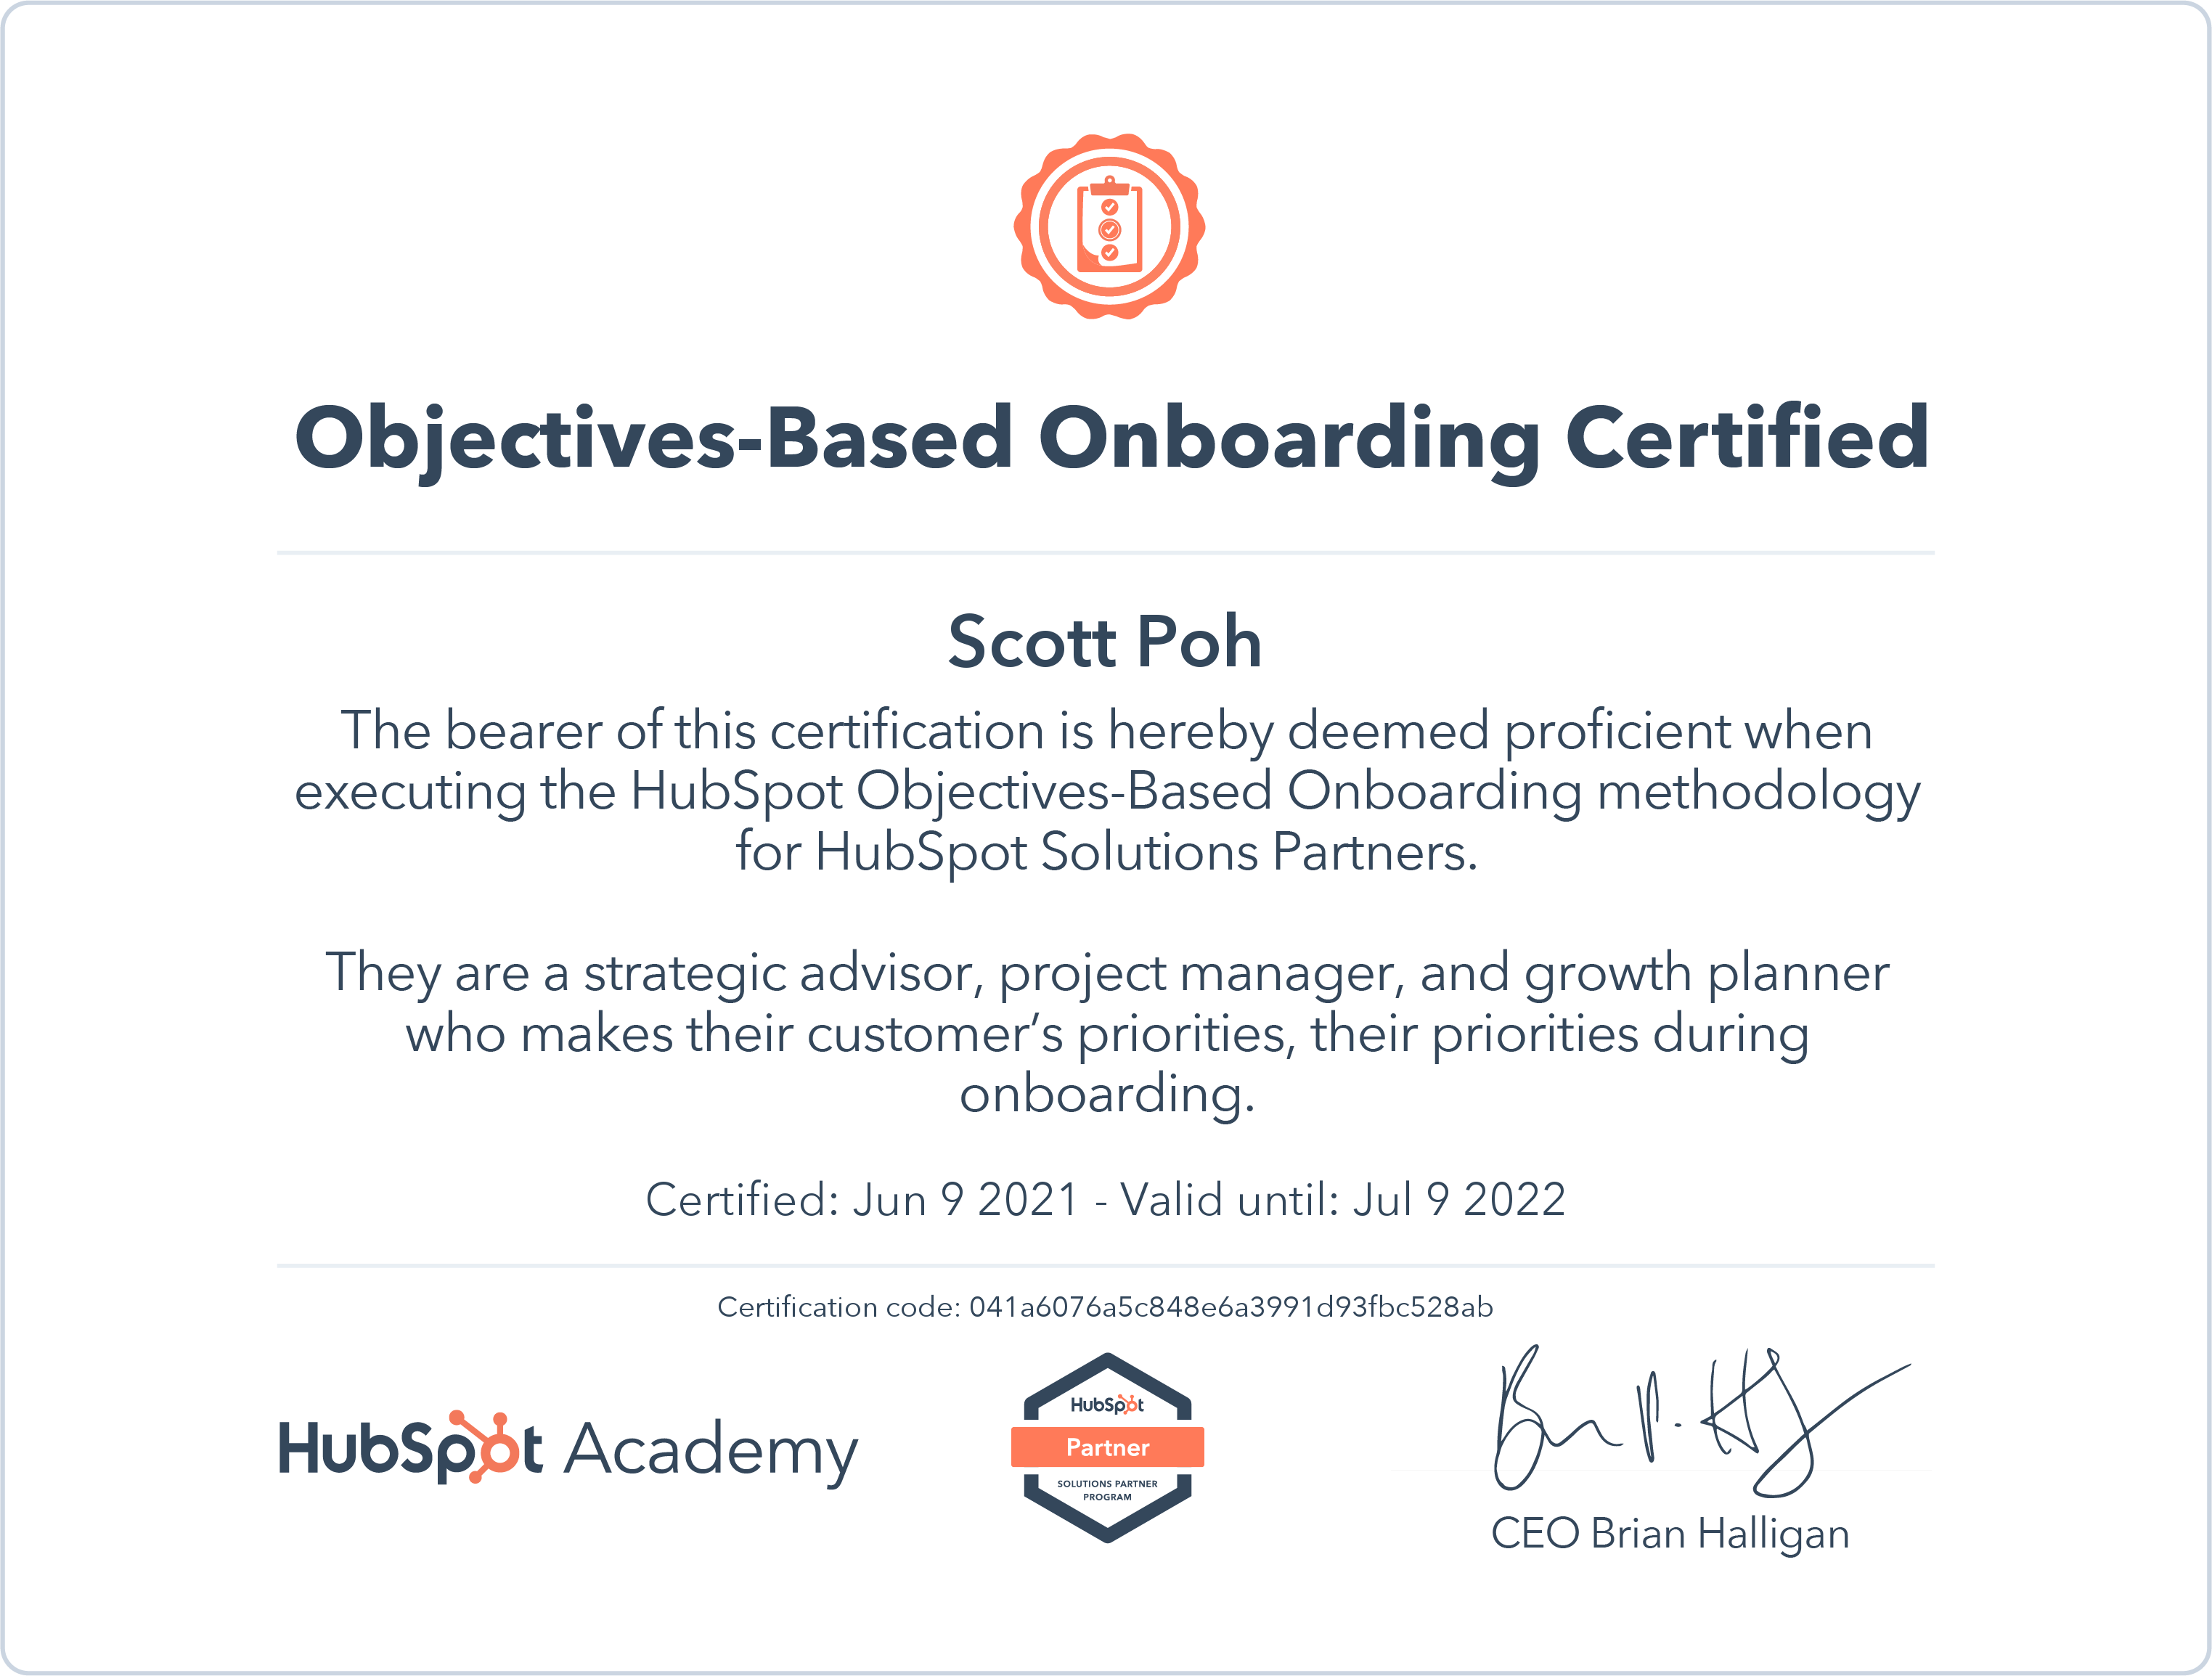 HubSpot Objectives-Based Onboarding Certificate